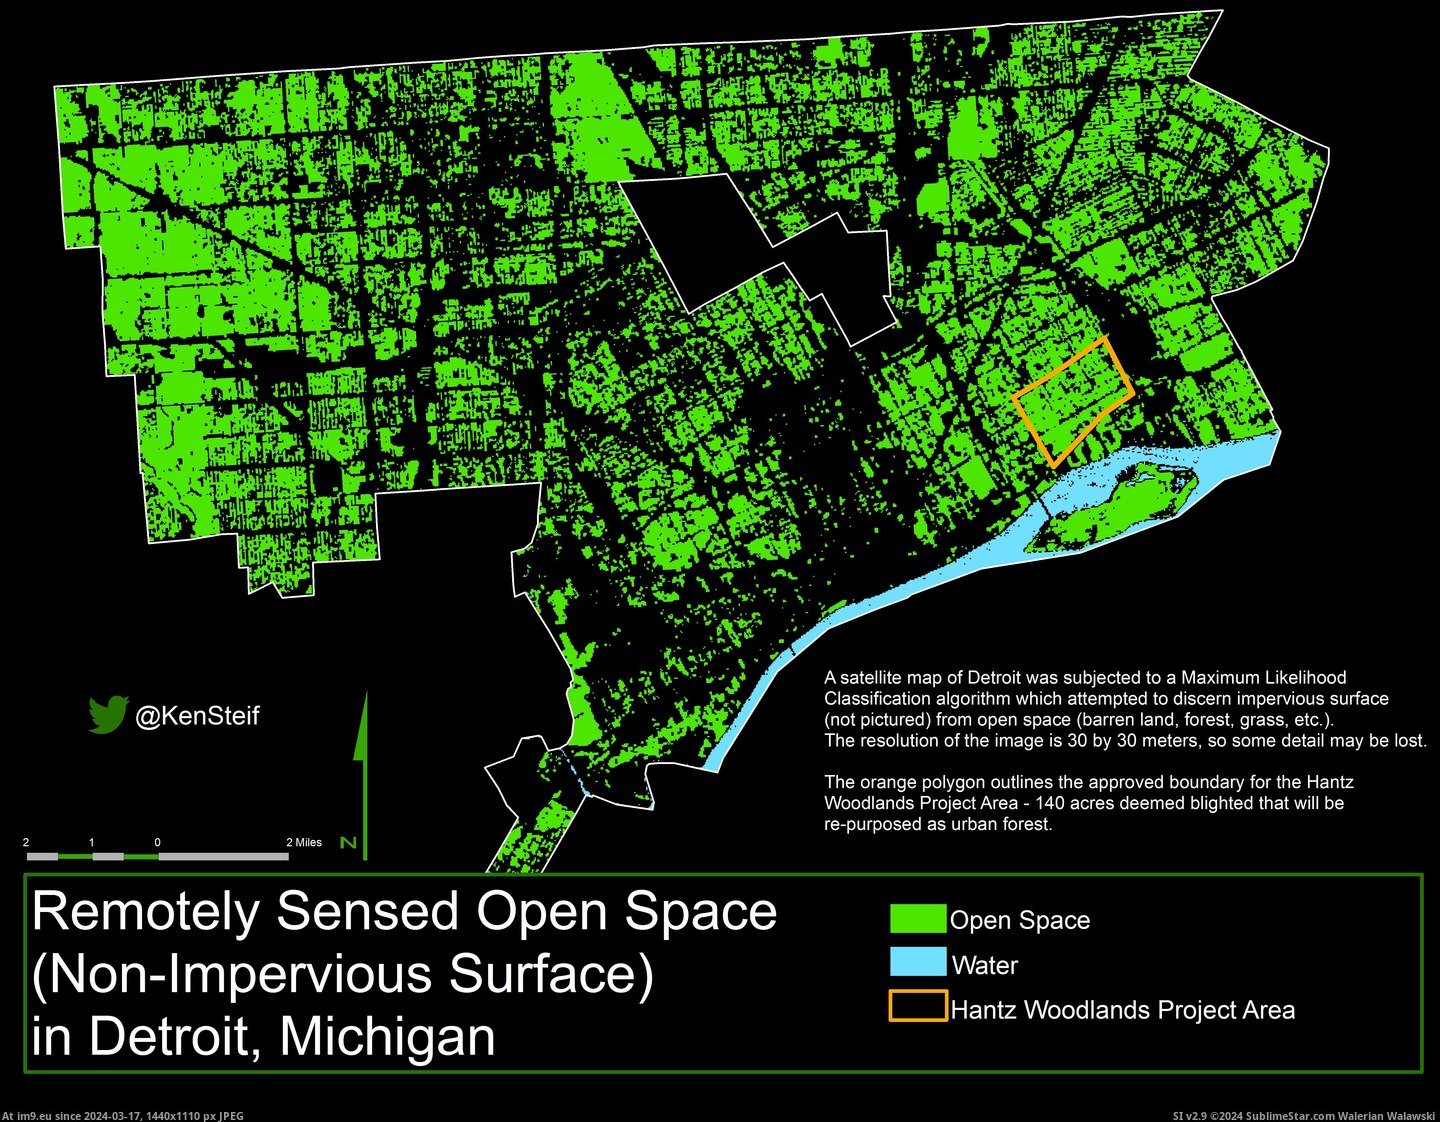 #Space #Detroit #Vacant #Land [Mapporn] Open Space-Vacant Land in Detroit [850 x 650] Pic. (Bild von album My r/MAPS favs))